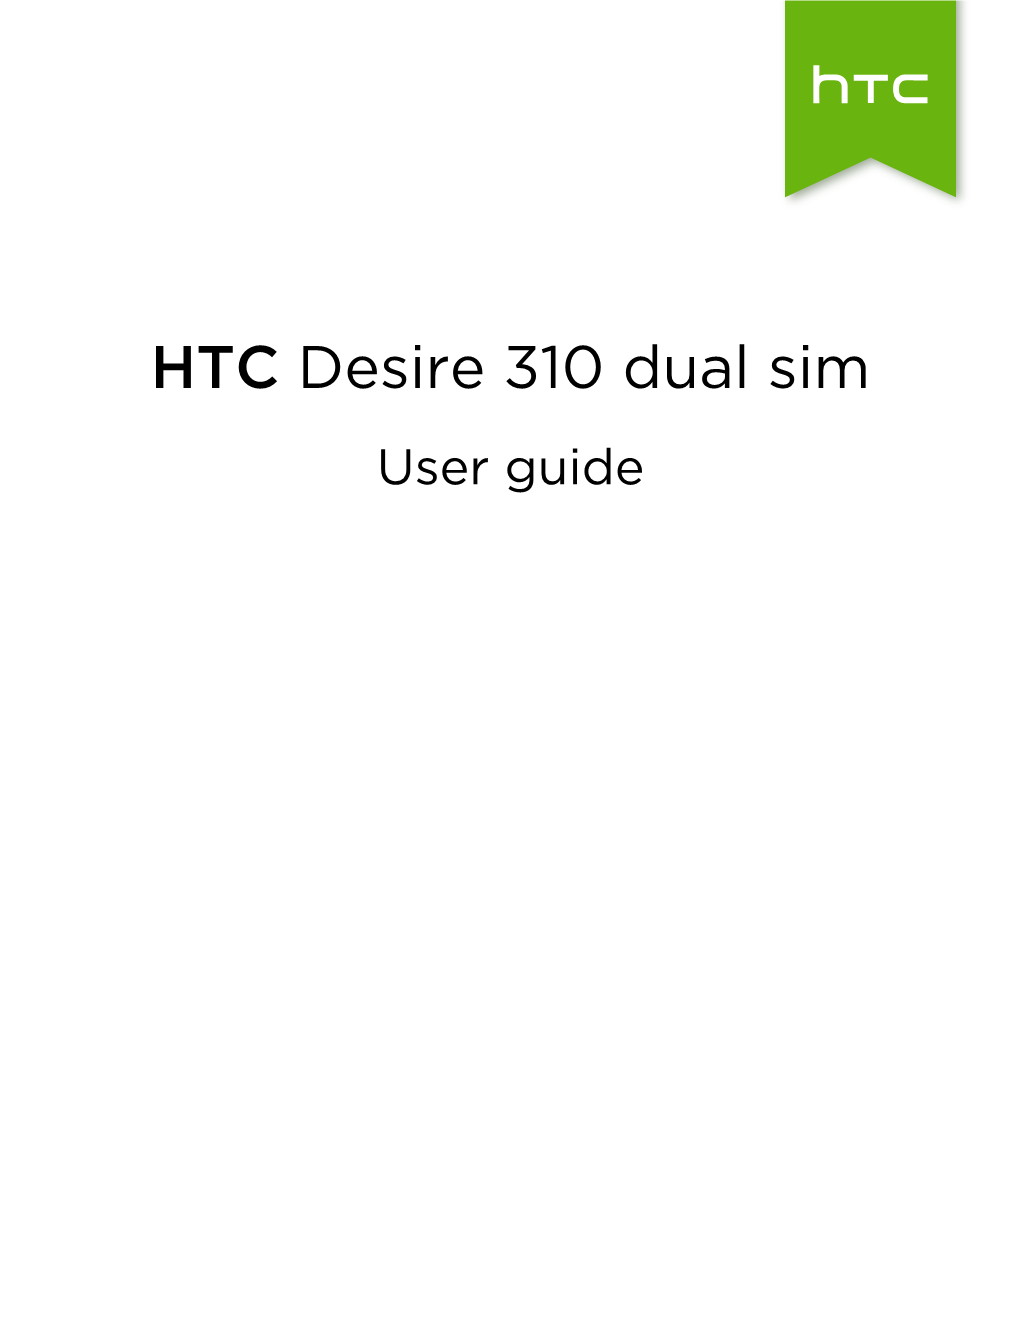 HTC Desire 310 Dual Sim User Guide 2 Contents Contents